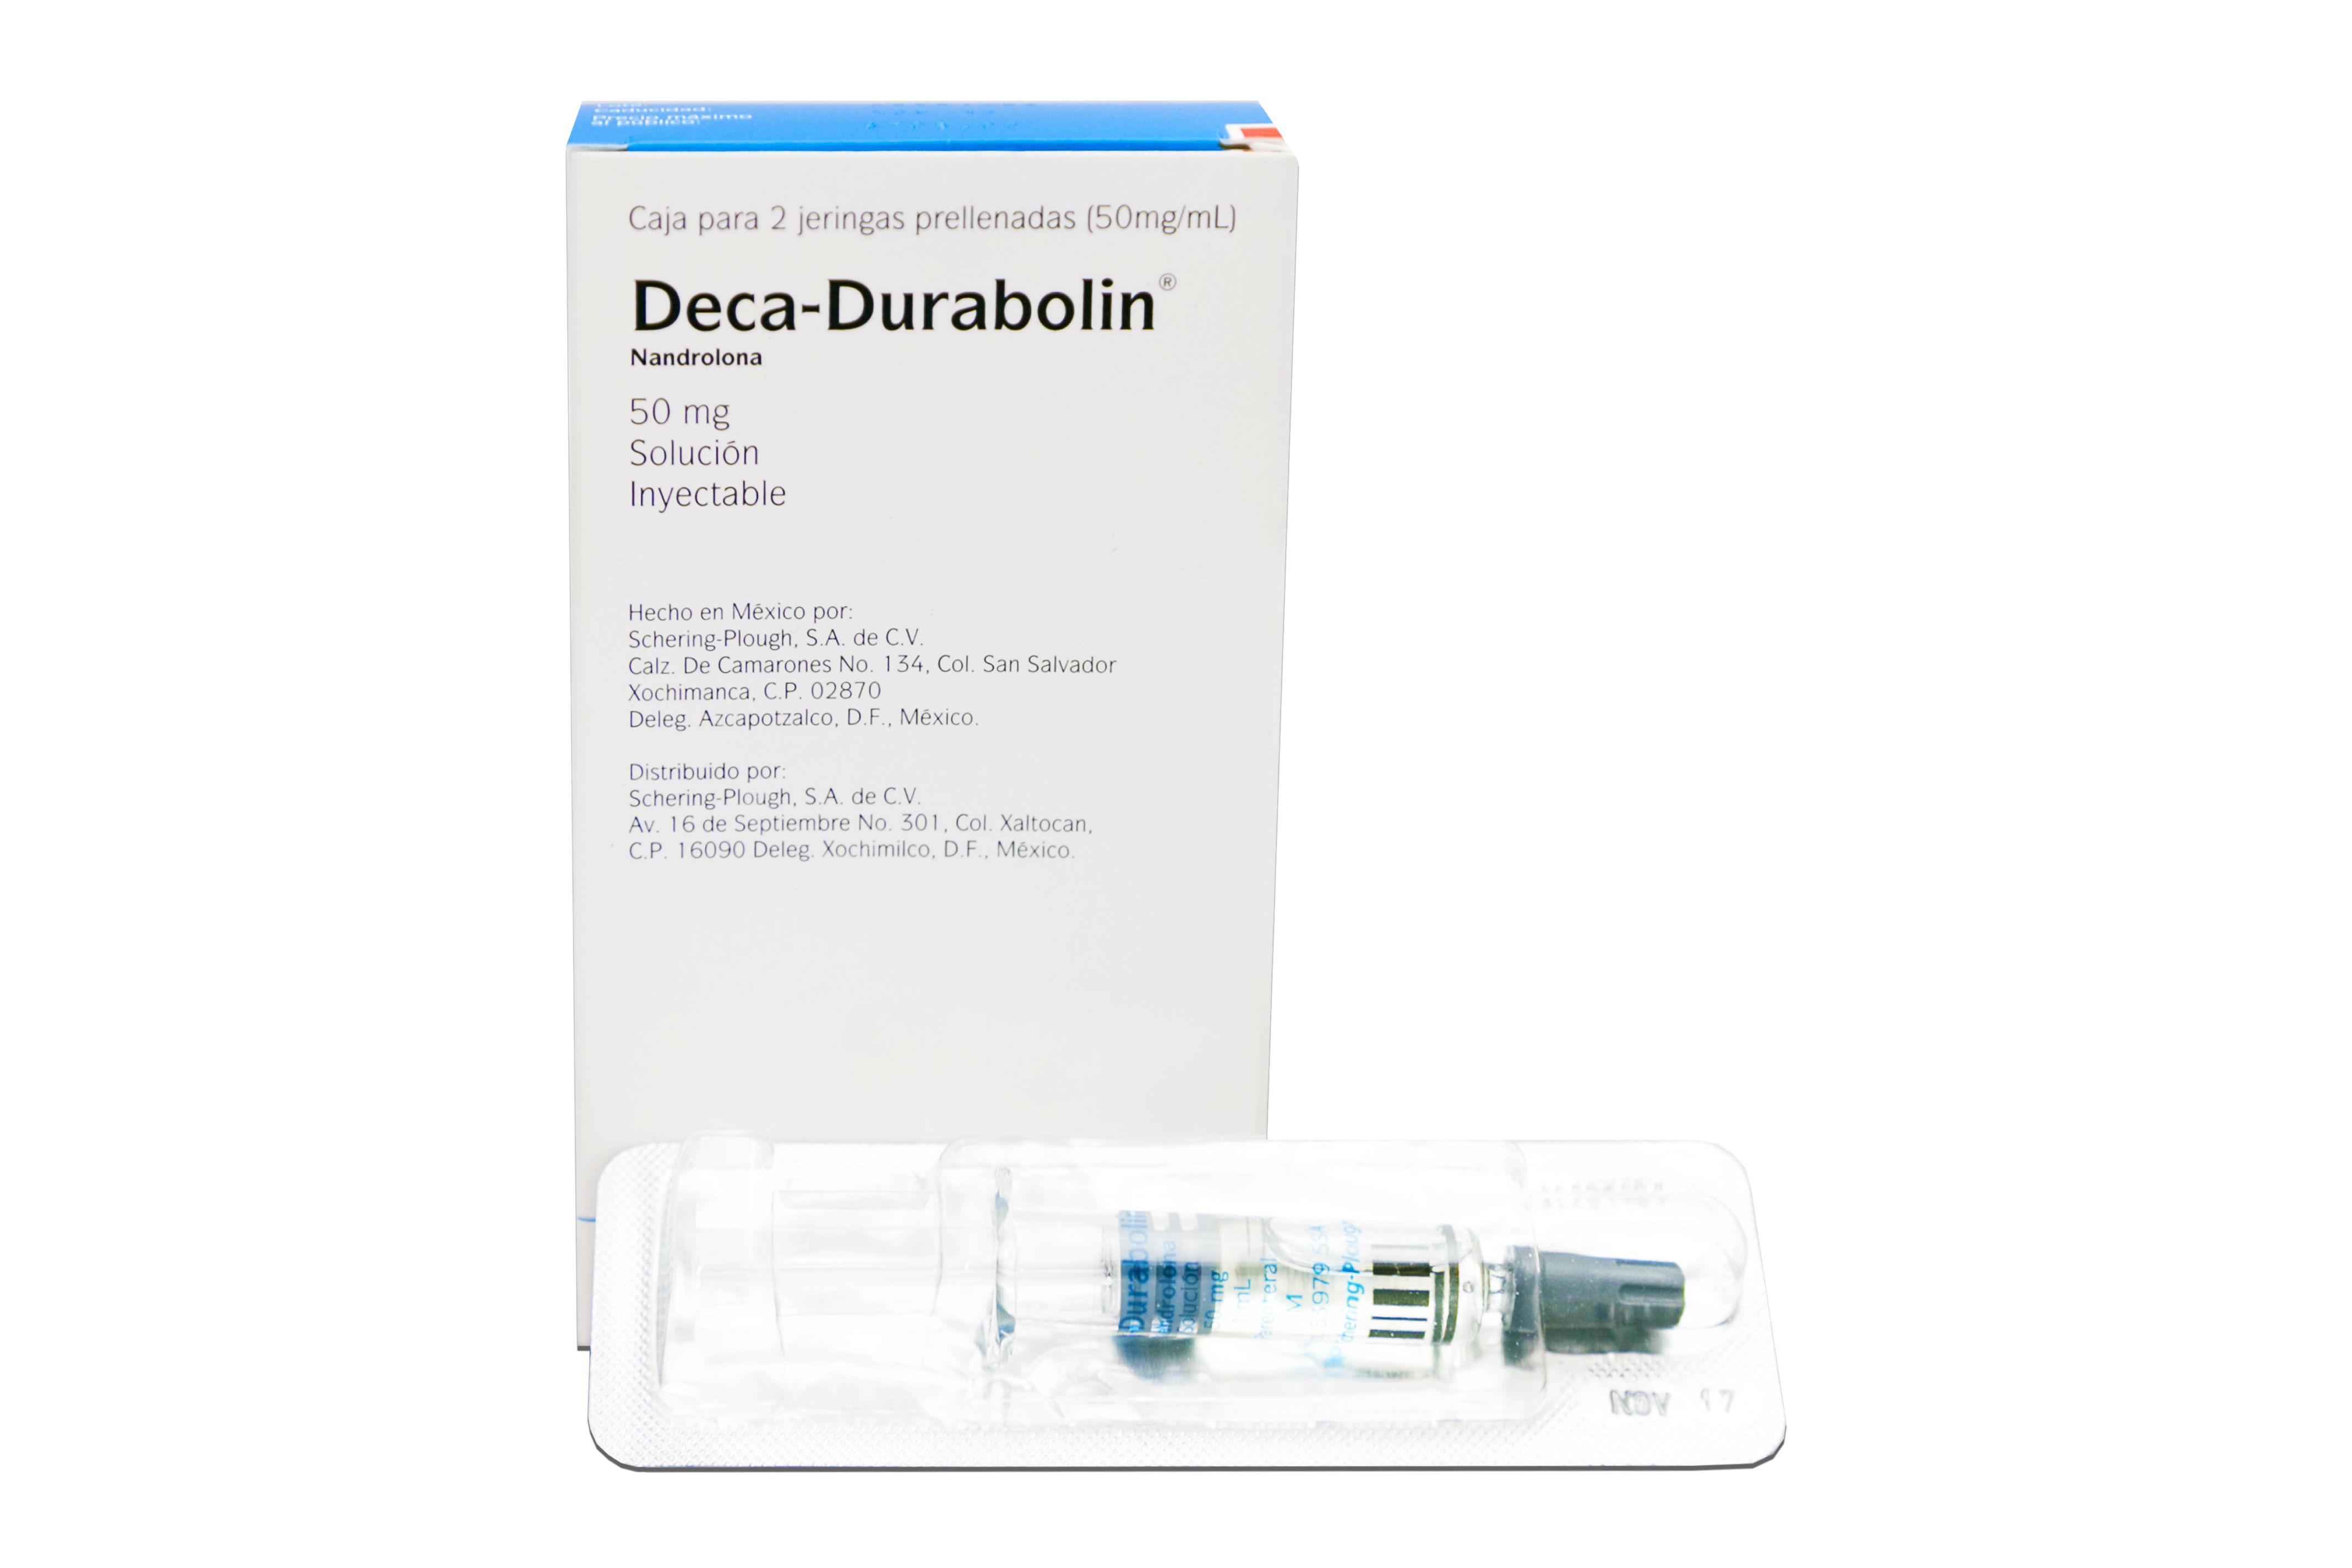 Creo que estoy enfermo Sentimental salchicha Precio Deca-Durabolin 50 mg 2 jeringas 1 ml | Farmalisto MX